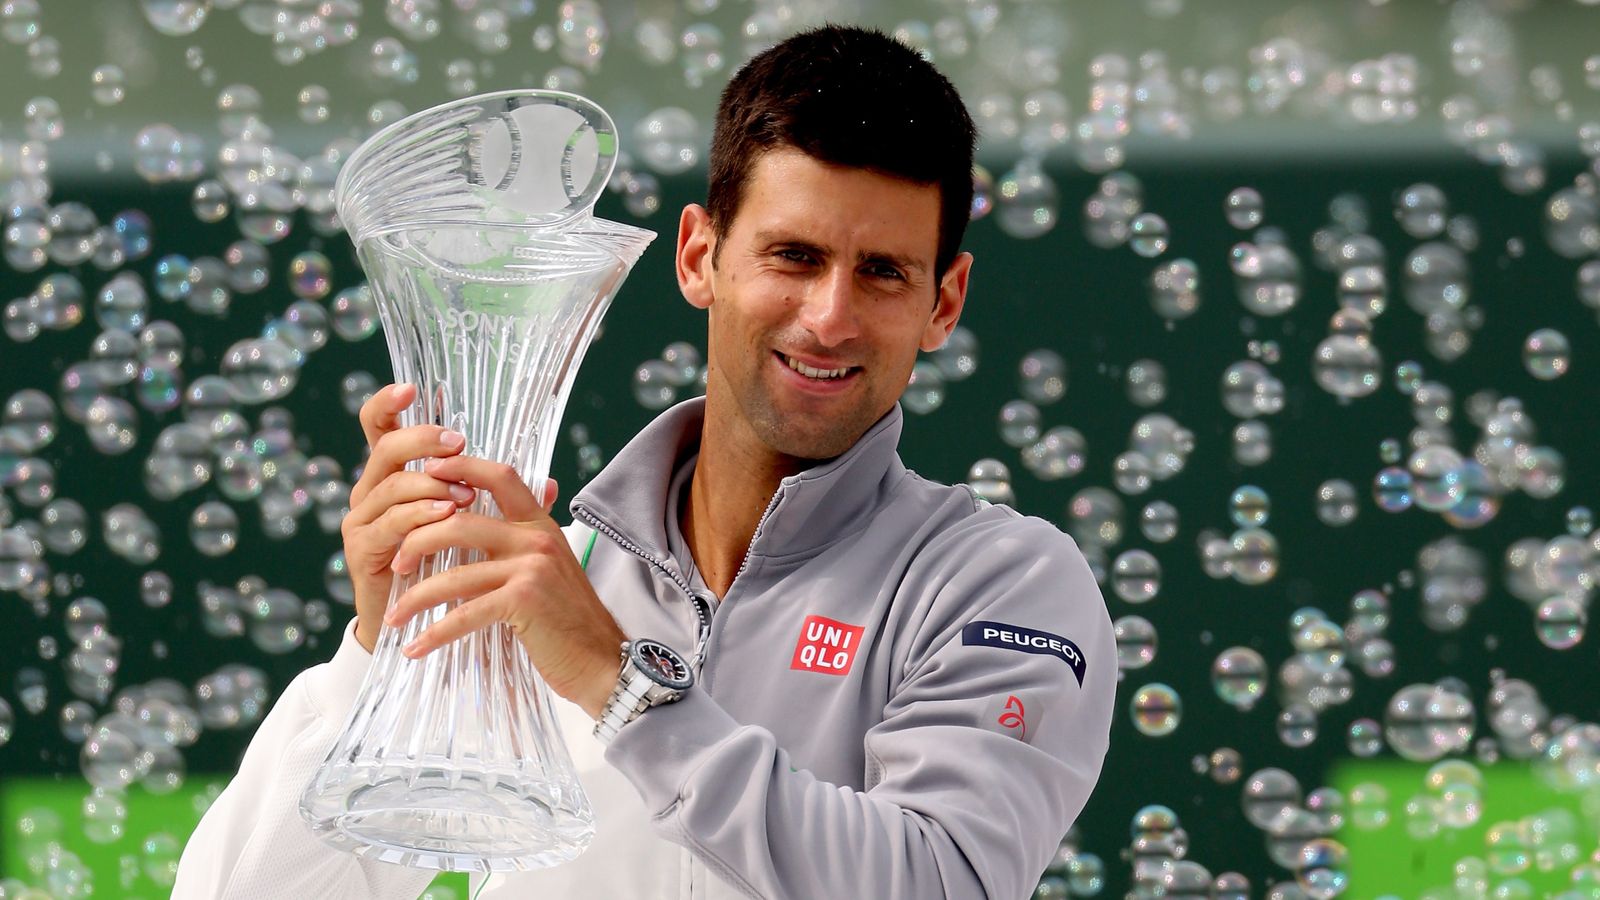 'Novak Djokovic produced bestever performance to win Miami Masters